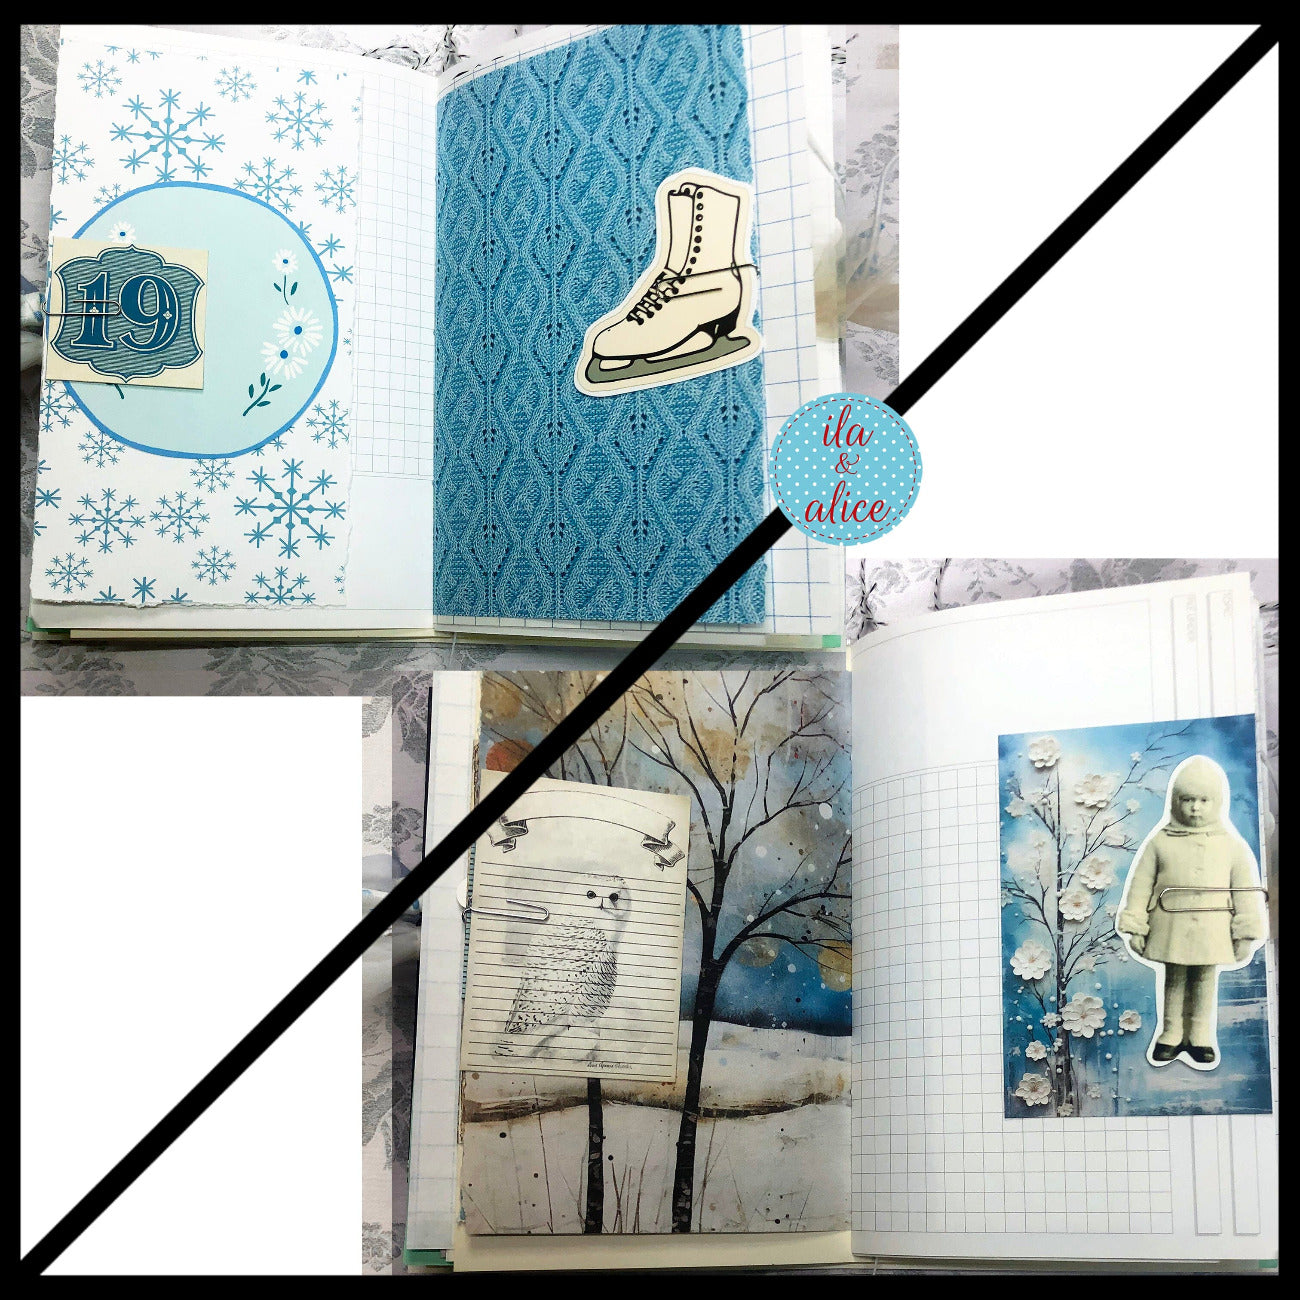 Blue Winter Junk Journal with Winter Wonderland Scene Journal ila & alice 